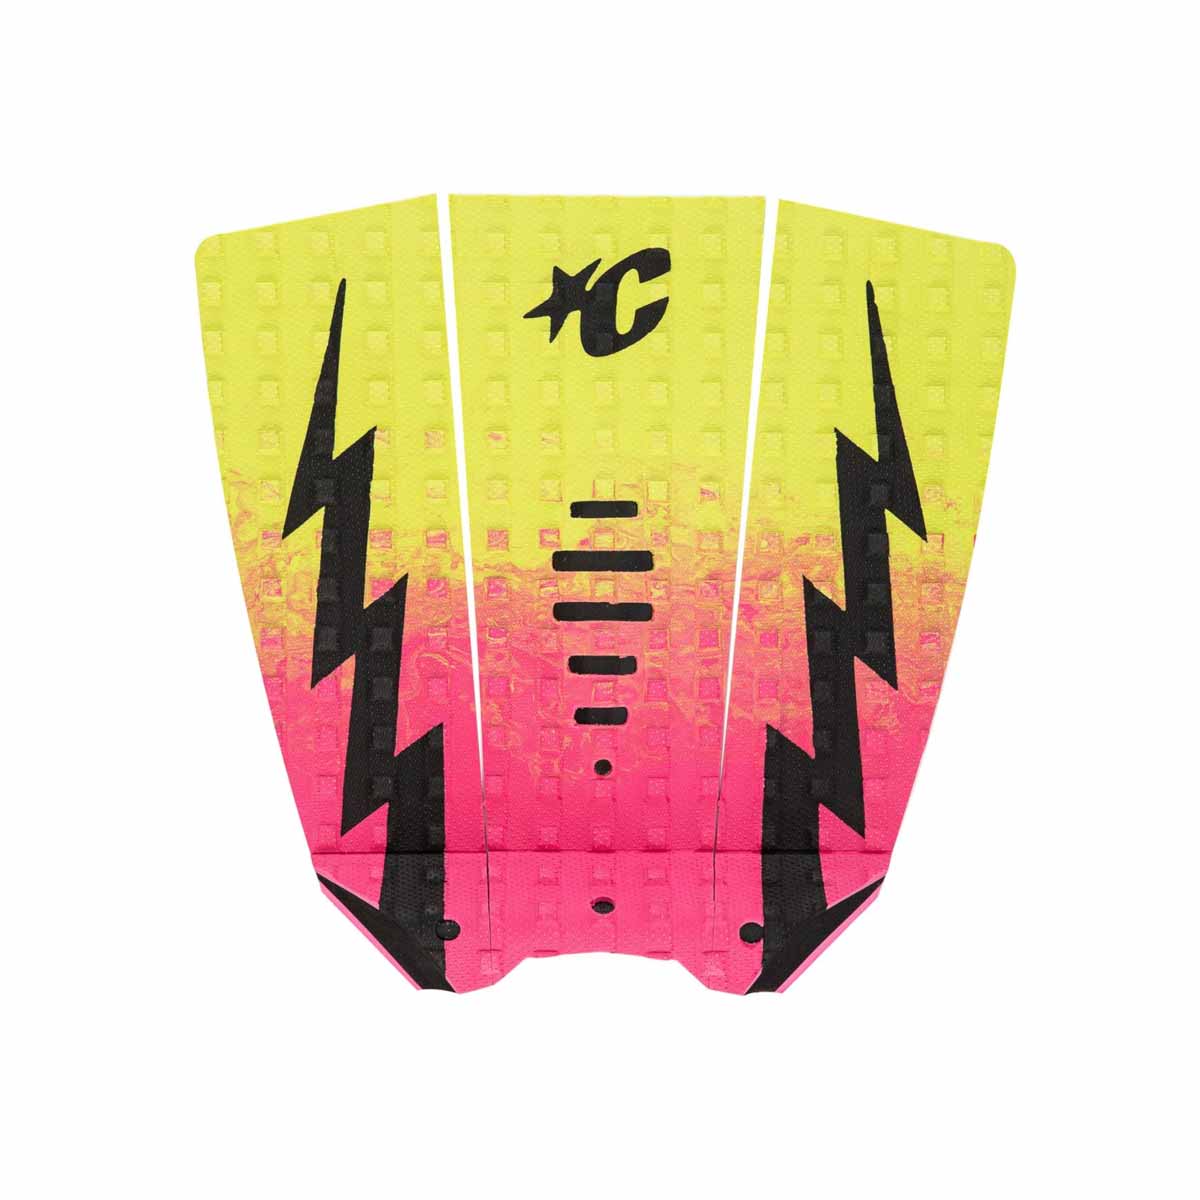 Surfboard Traction Pad Creatures Mick Eugene Fanning Lite – Pink Lemonade